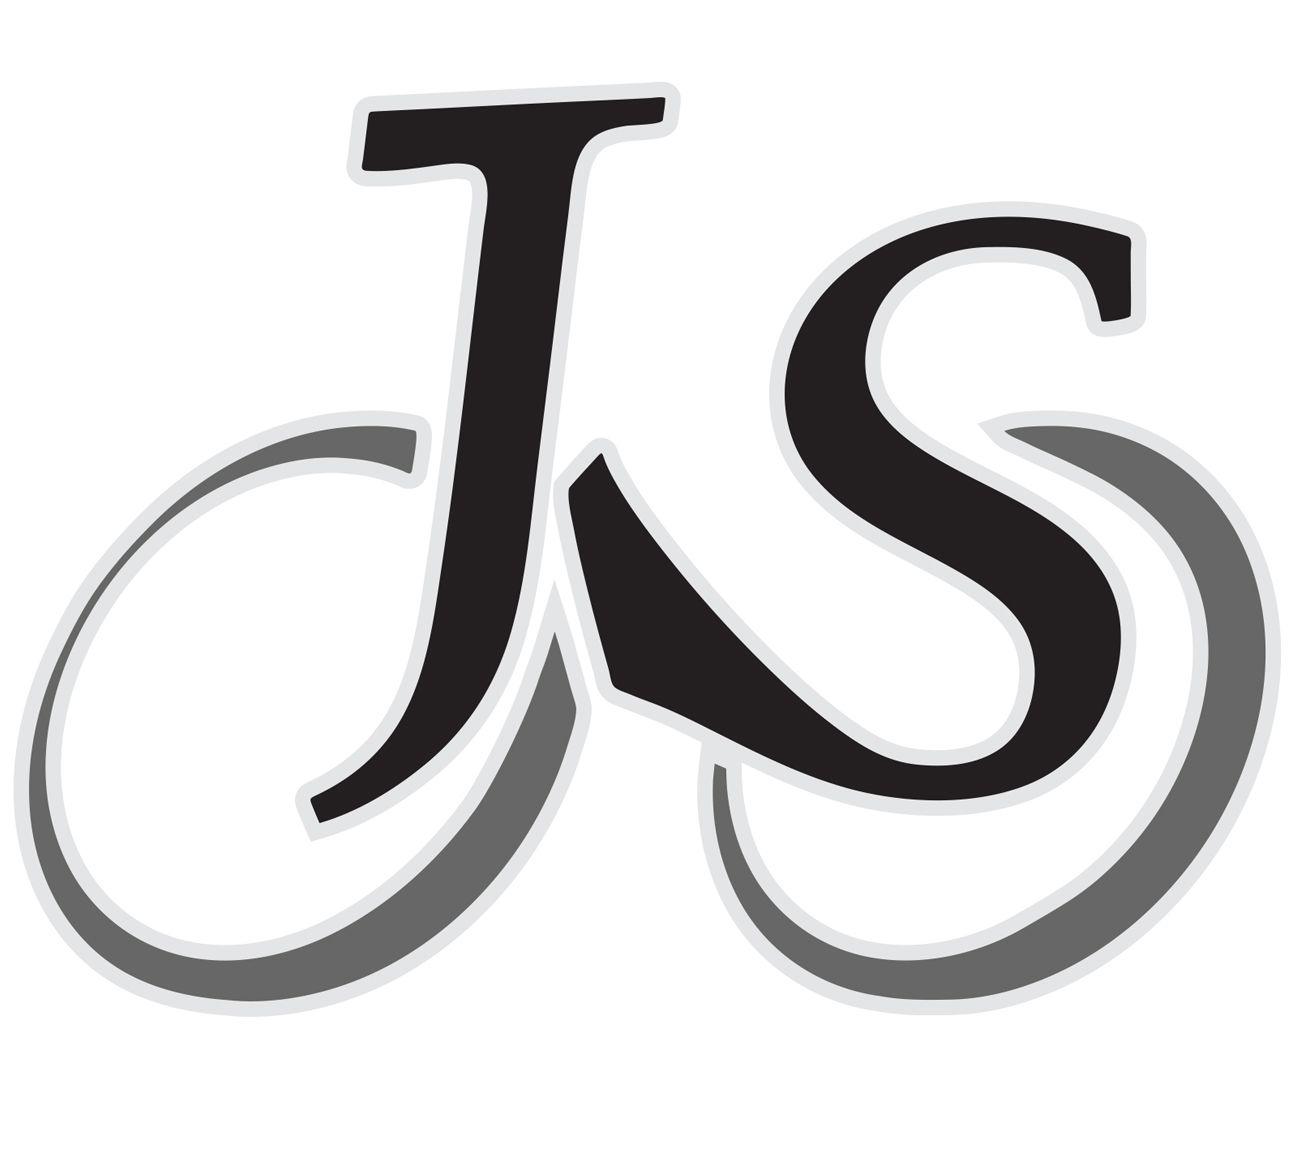 S j images. Логотип j. Буквы js. Логотипы с буквами j s. JAVASCRIPT логотип.